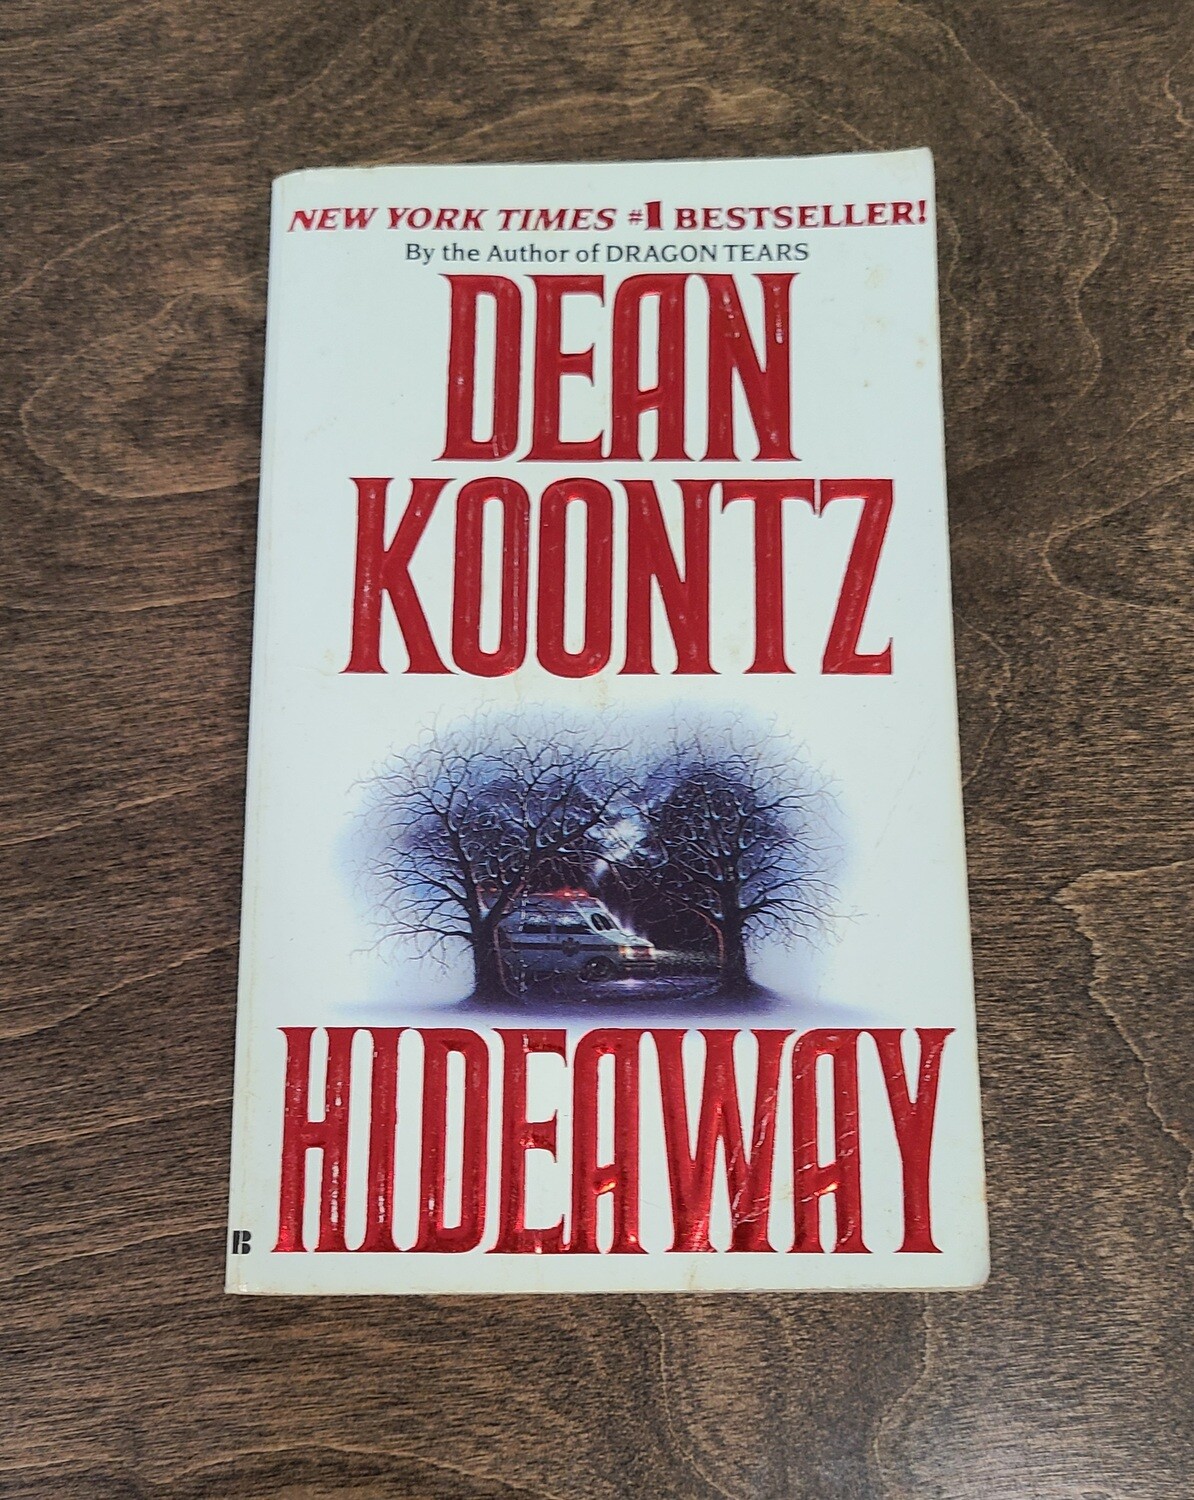 Hideaway by Dean Koontz - Paperback